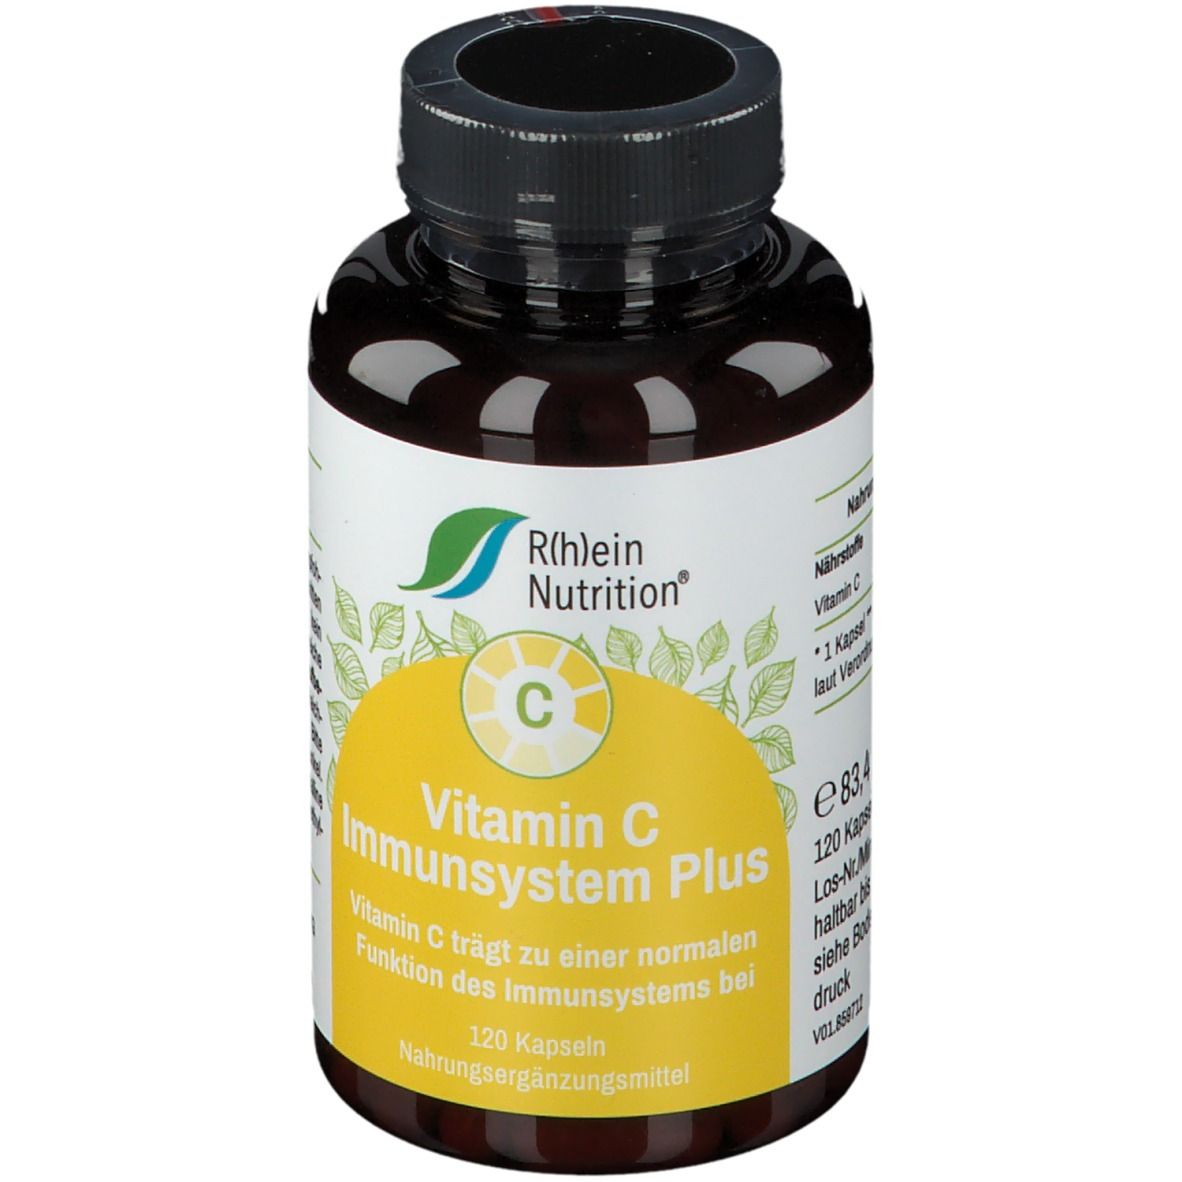 RheinNutrition® Vitamin C Immunsystem Plus Kapseln